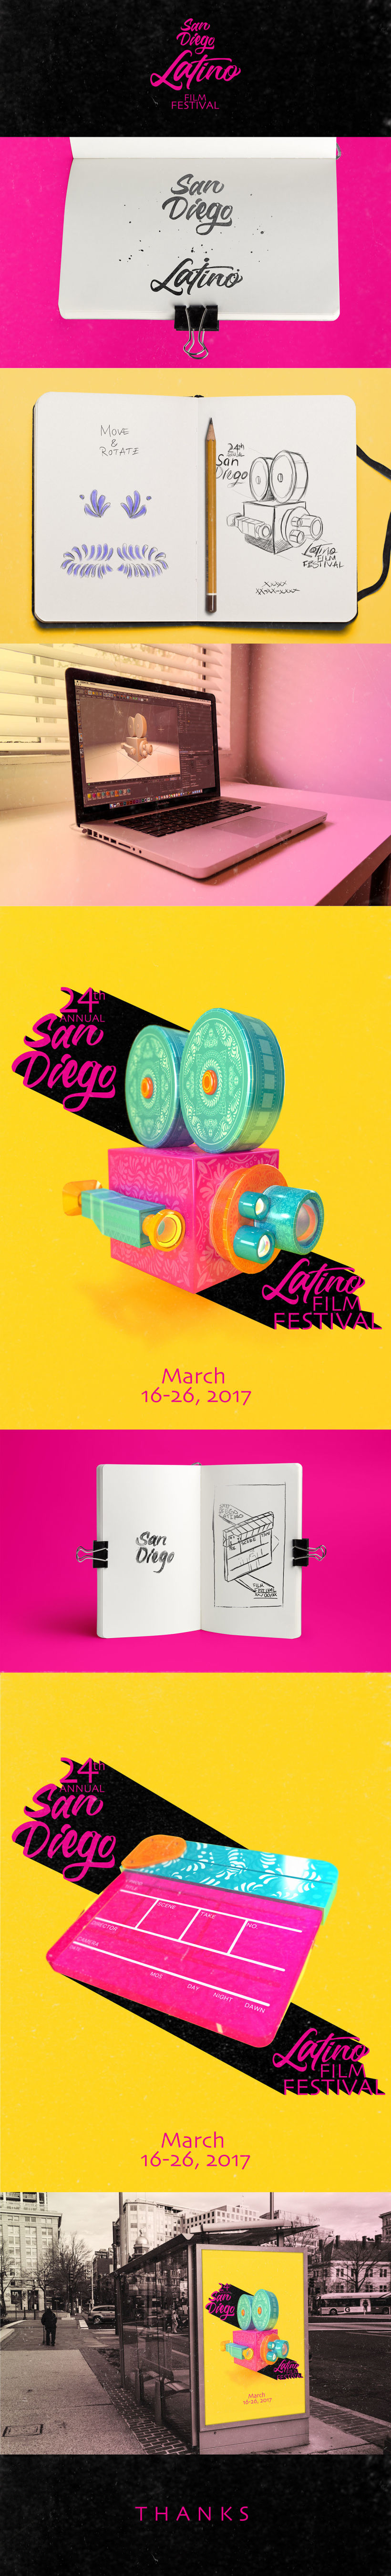 San Diego Latino Film Festival -1